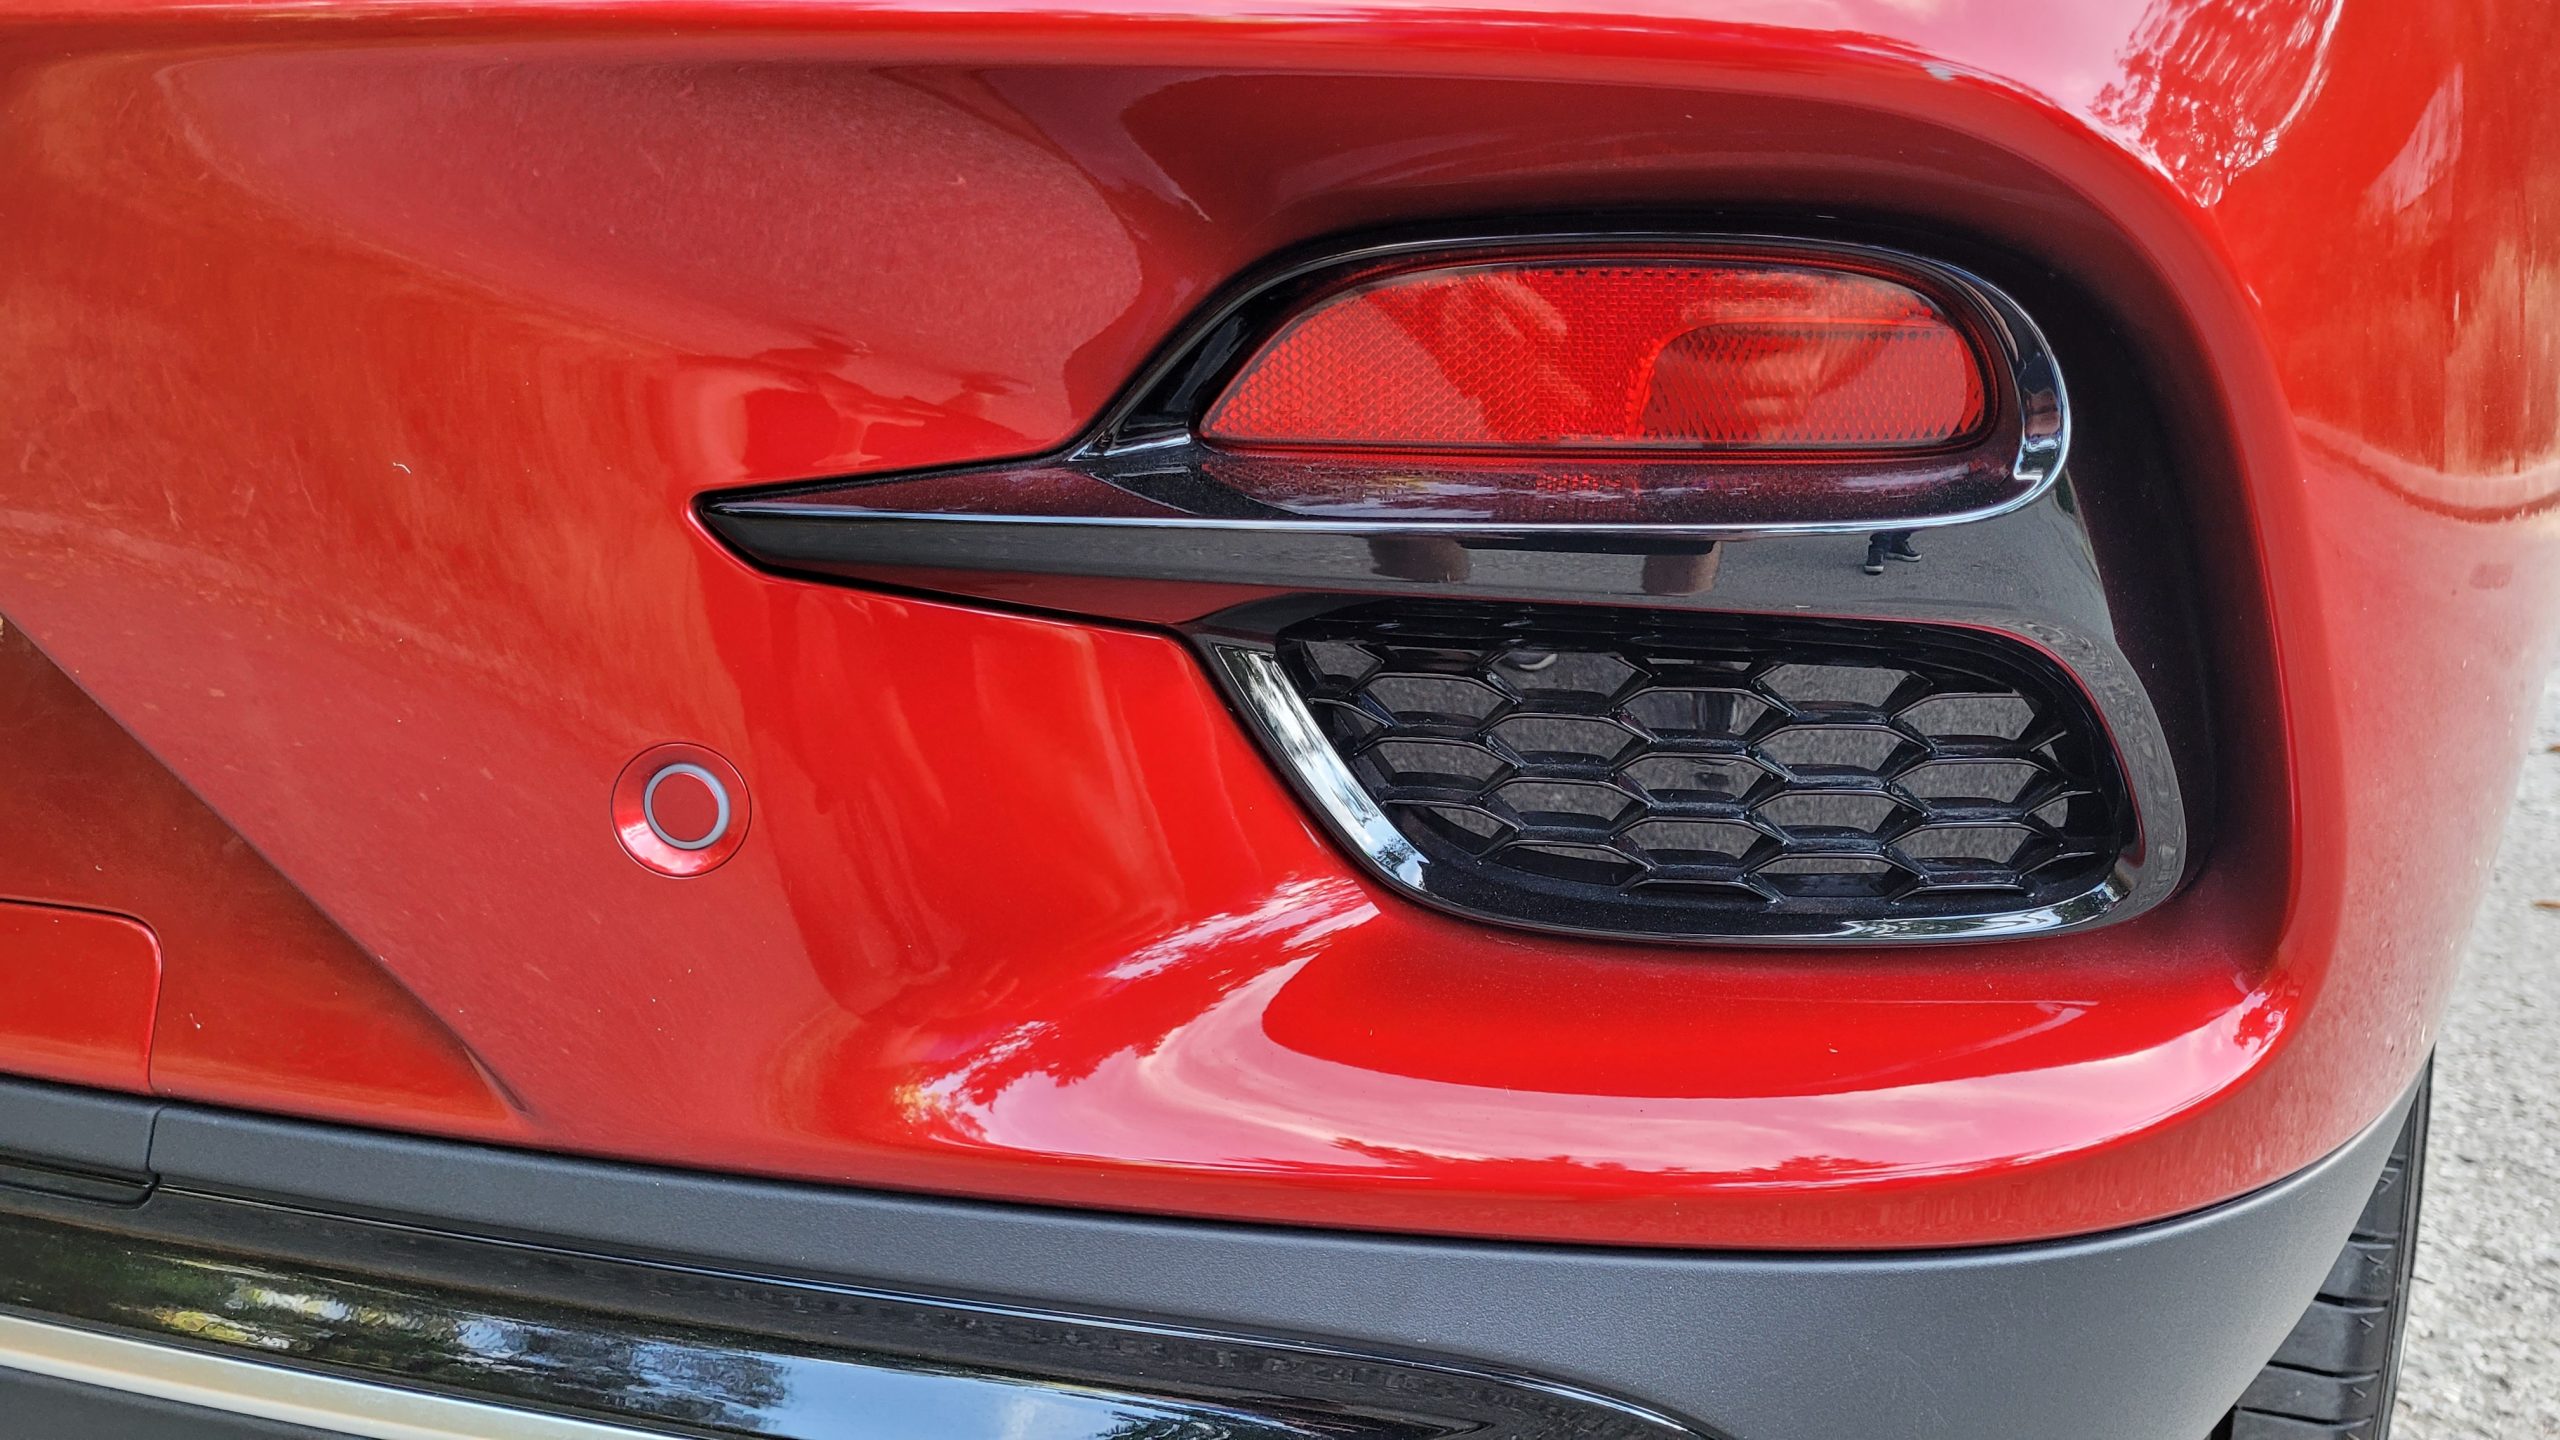 MG ZS rear bumper reflector close-up